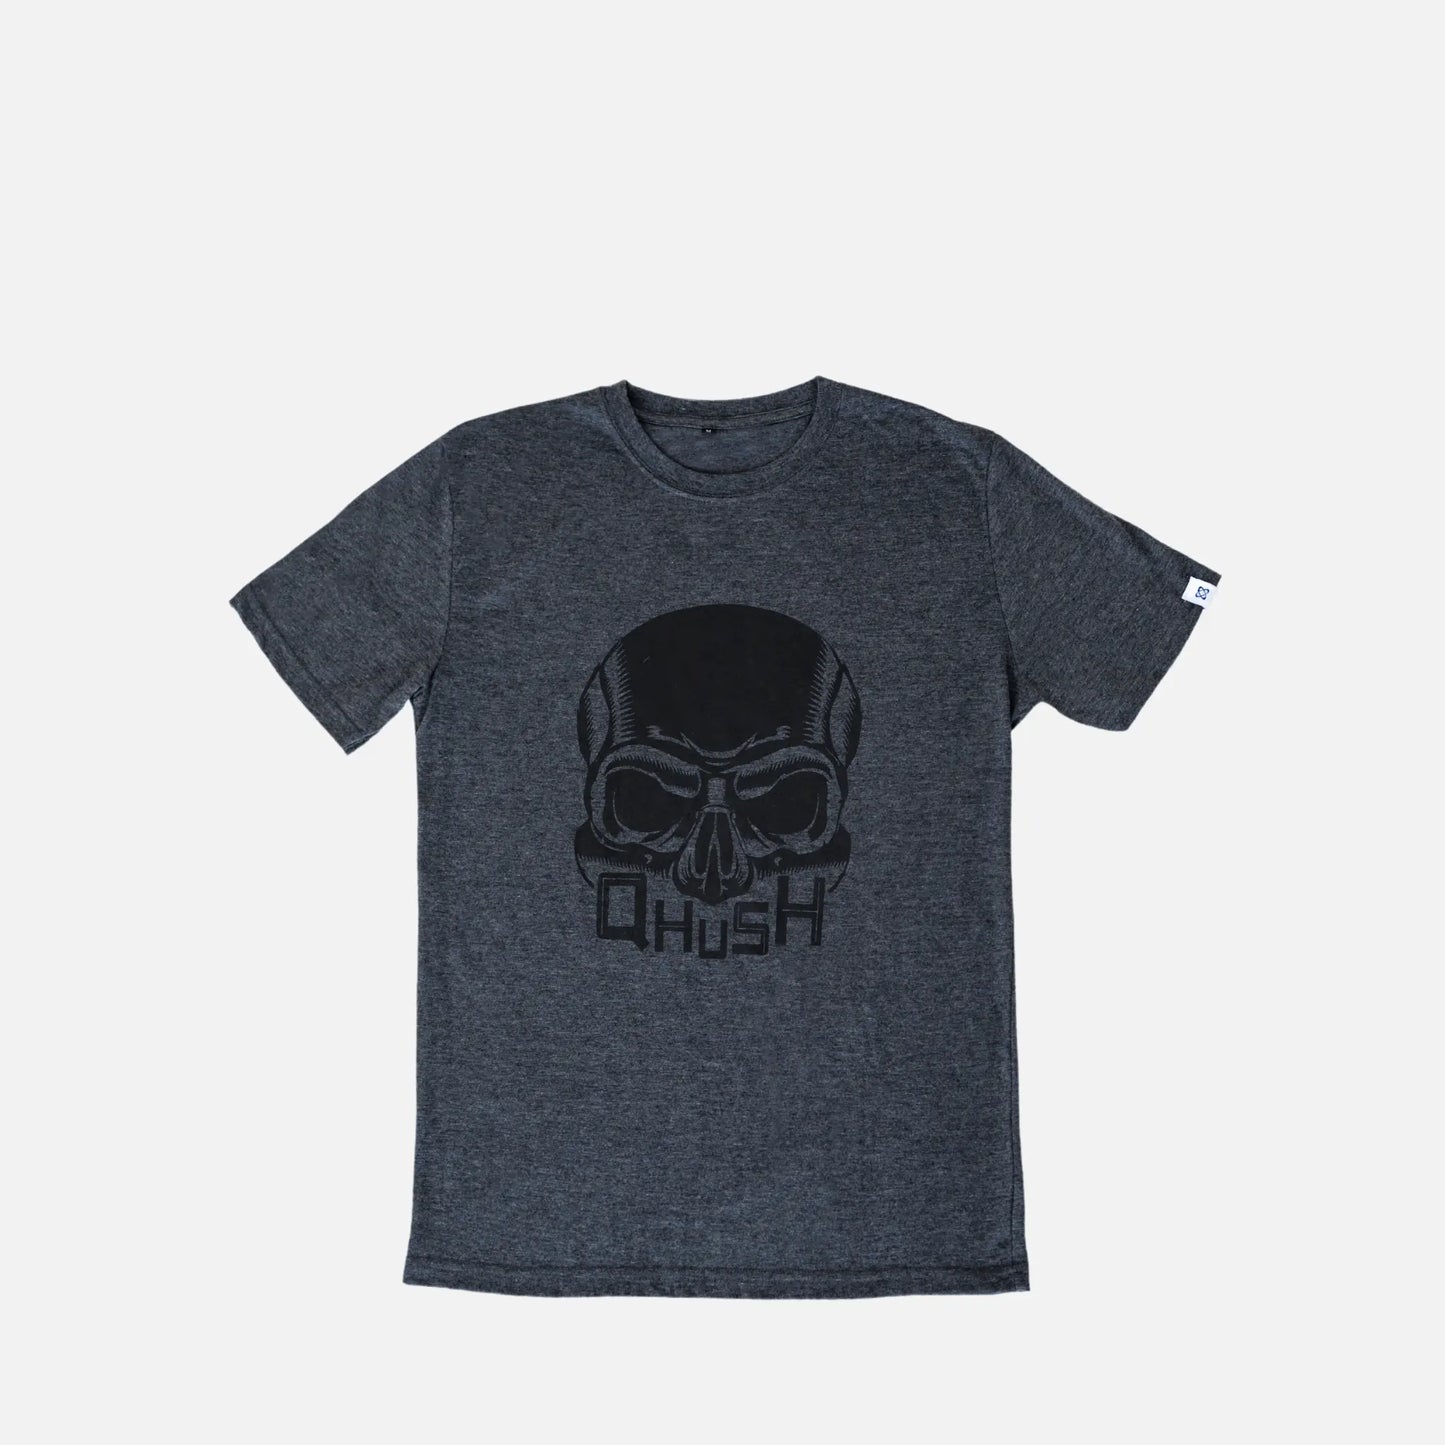 Qhush Grey Melange T-shirt